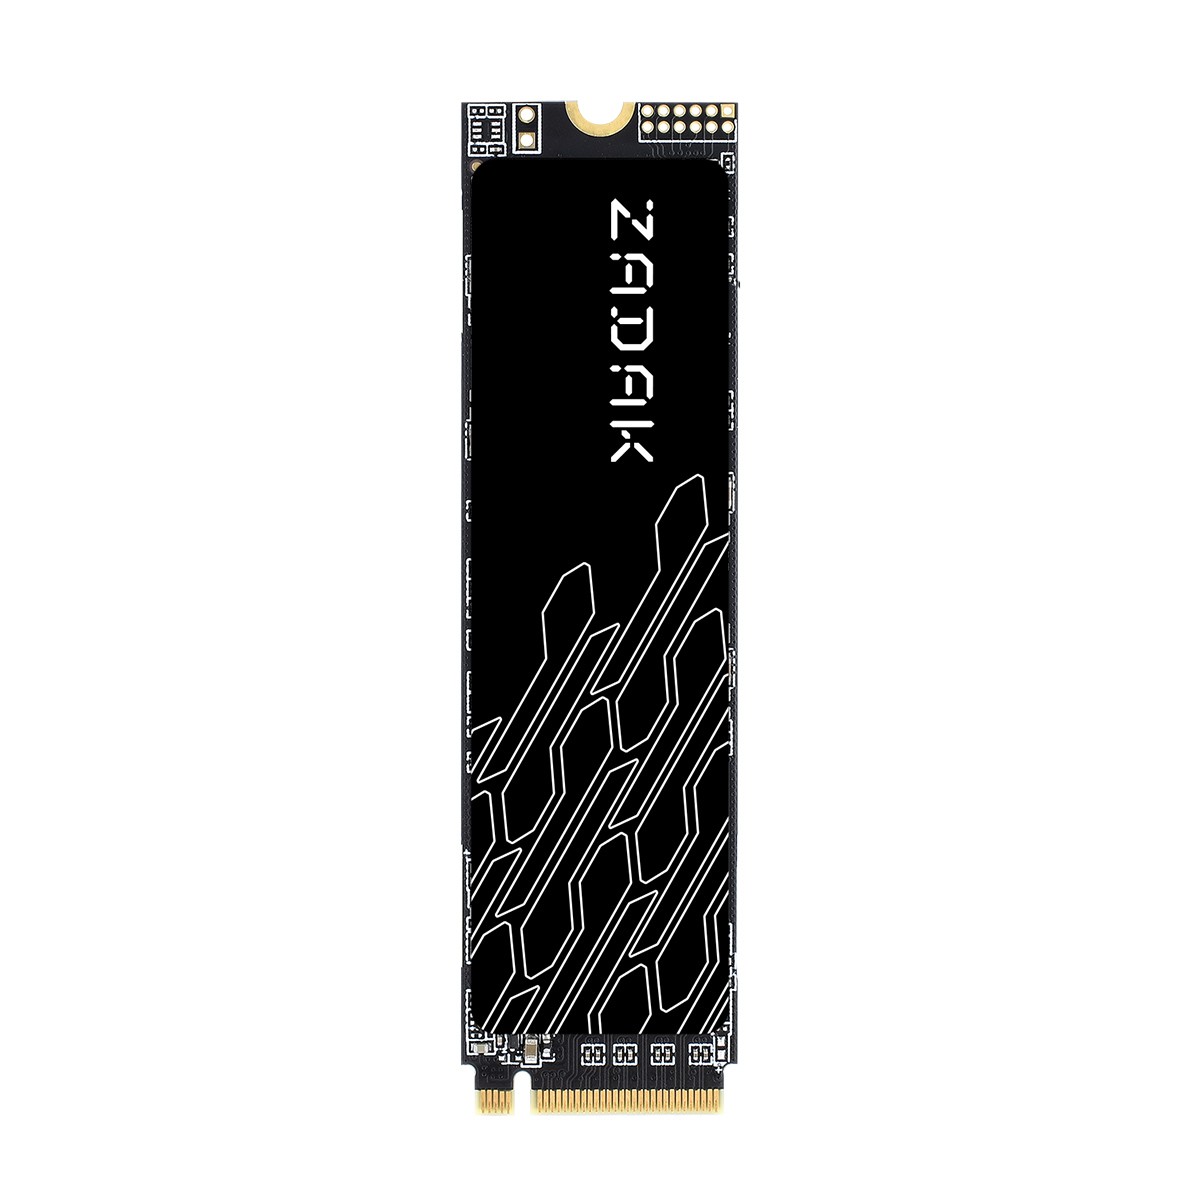 SSD Zadak TWSG3 256GB, PCIe Gen 3x4 M.2 NVMe, Leitura 3500MBs e Gravação 3200MBs, ZS256GTWSG3-1